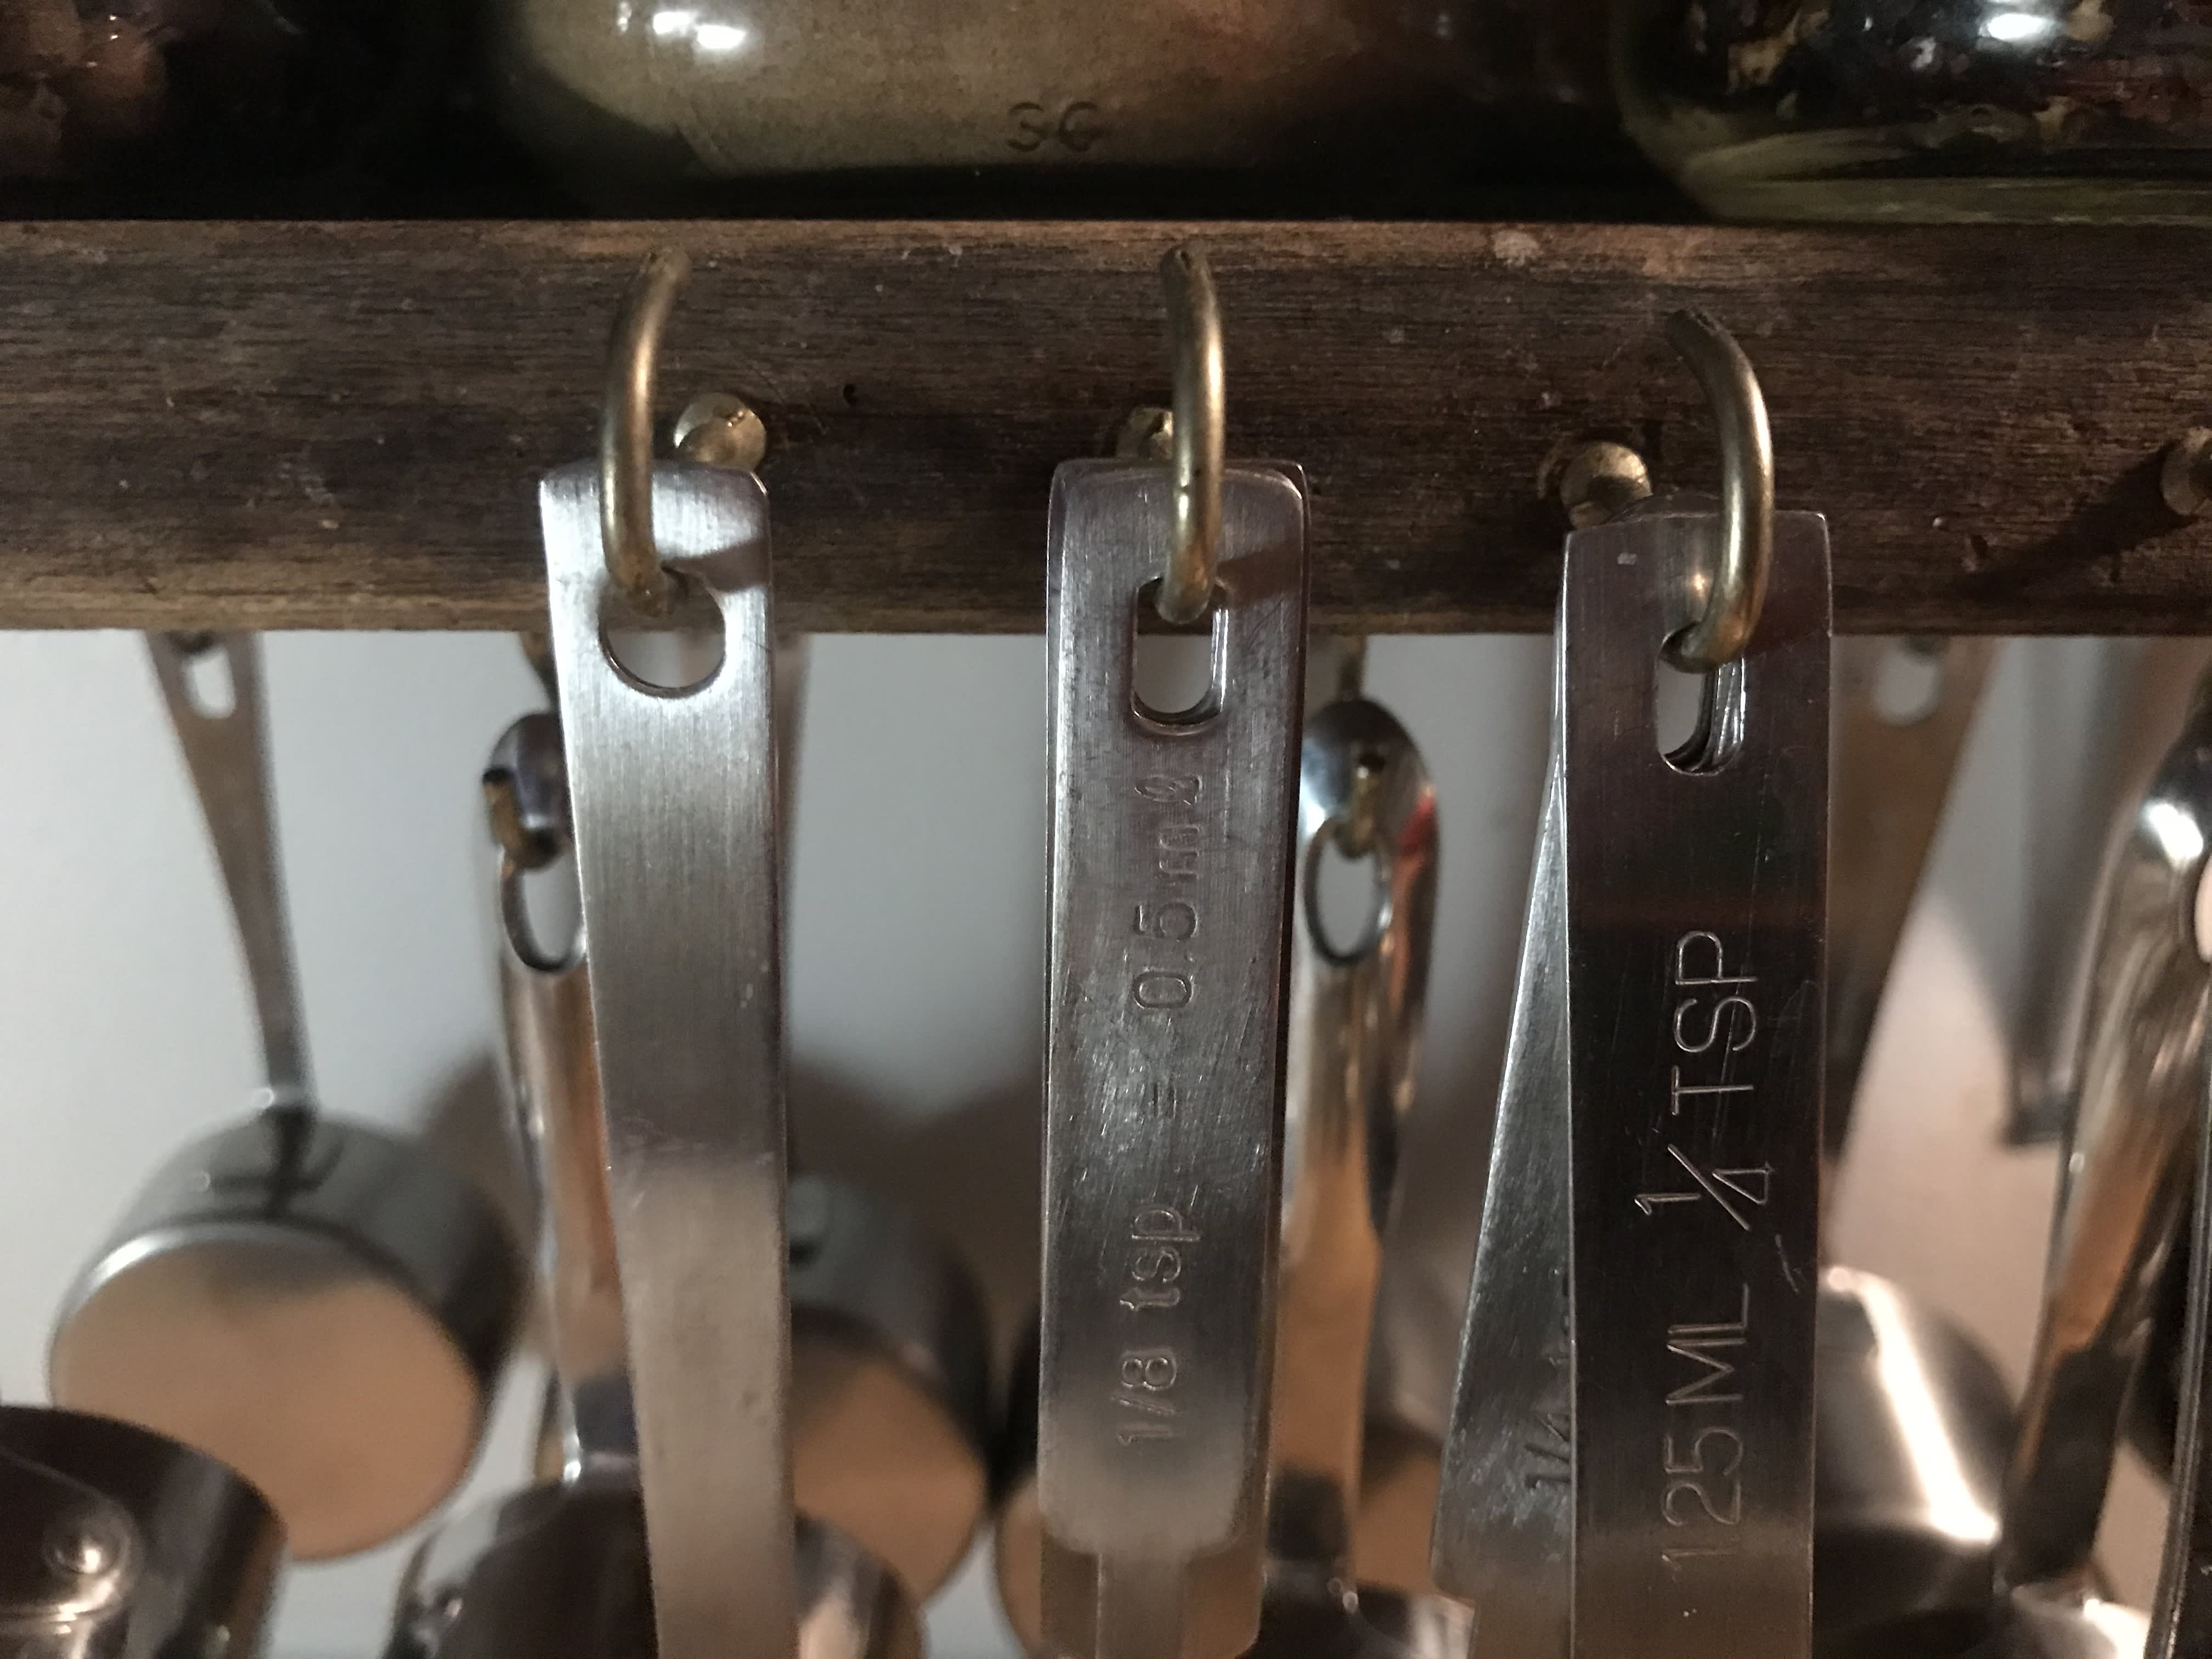 AllSpice Stainless Steel Double Sided Measuring Spoon- 1/2 Teaspoon and 1/4  Teaspoon